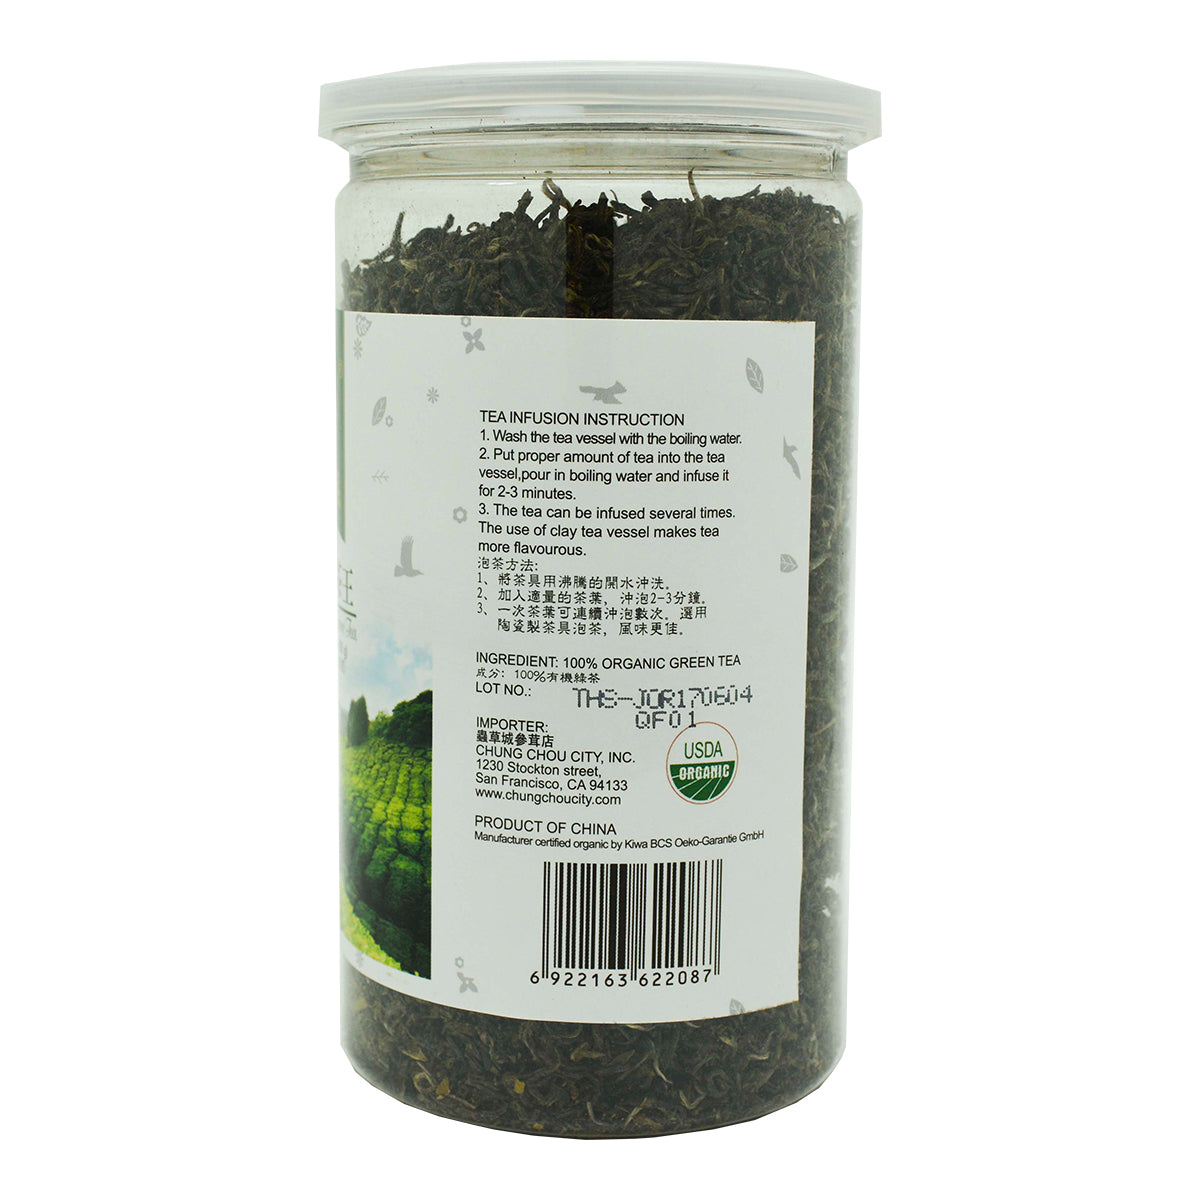 Organic King's Green Tea 160g